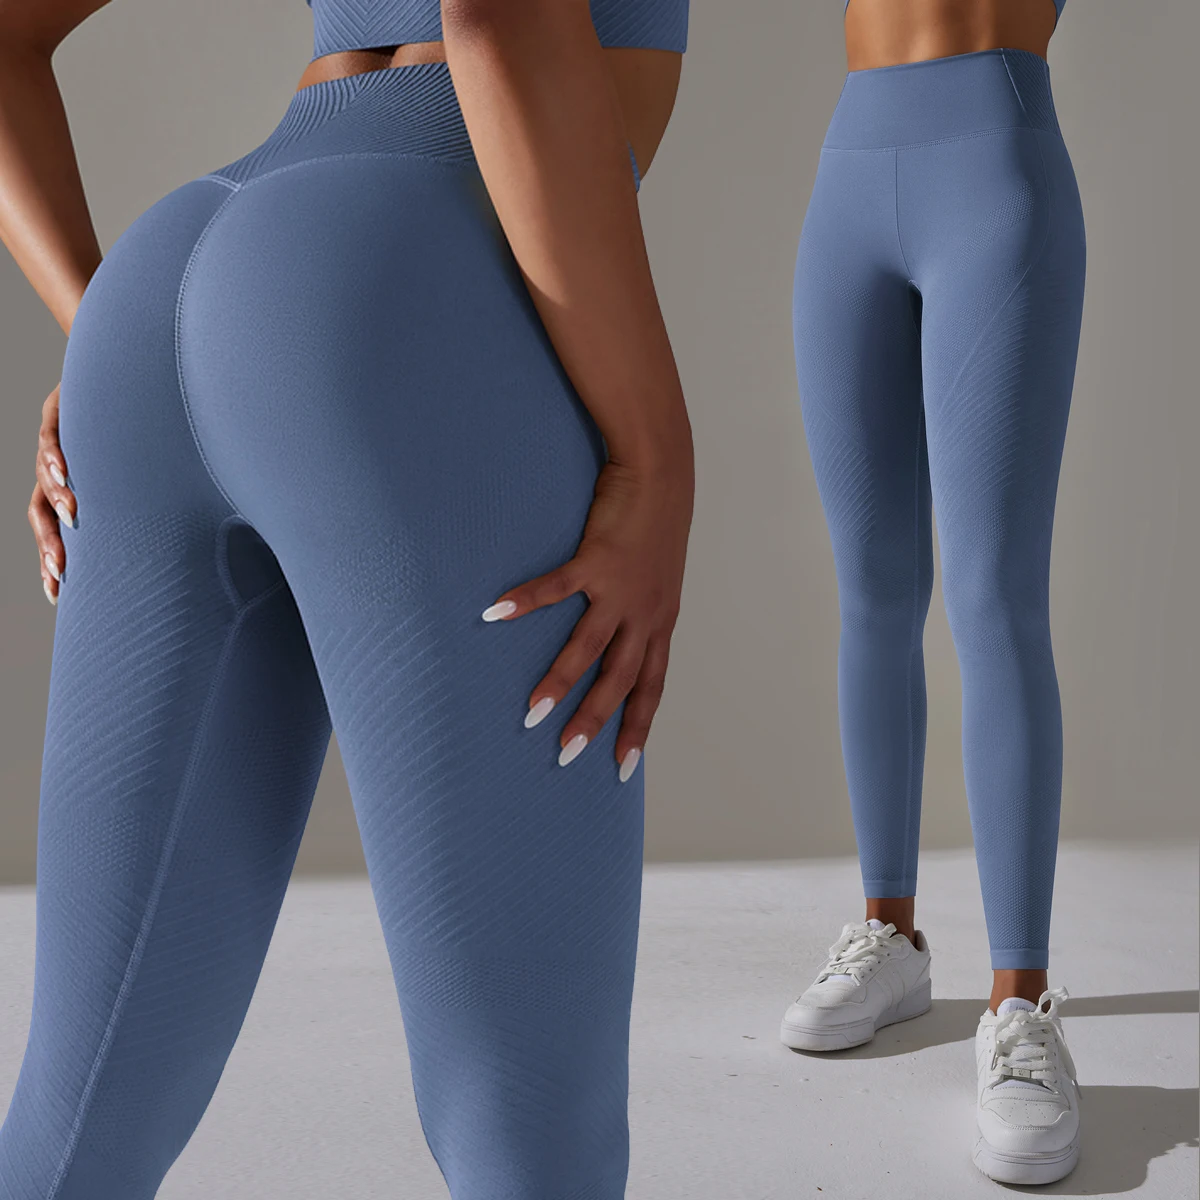 

Stylish Yoga Legging for Women Latest Design Yoga Pants High Waist Compression Athletic Workout Legging